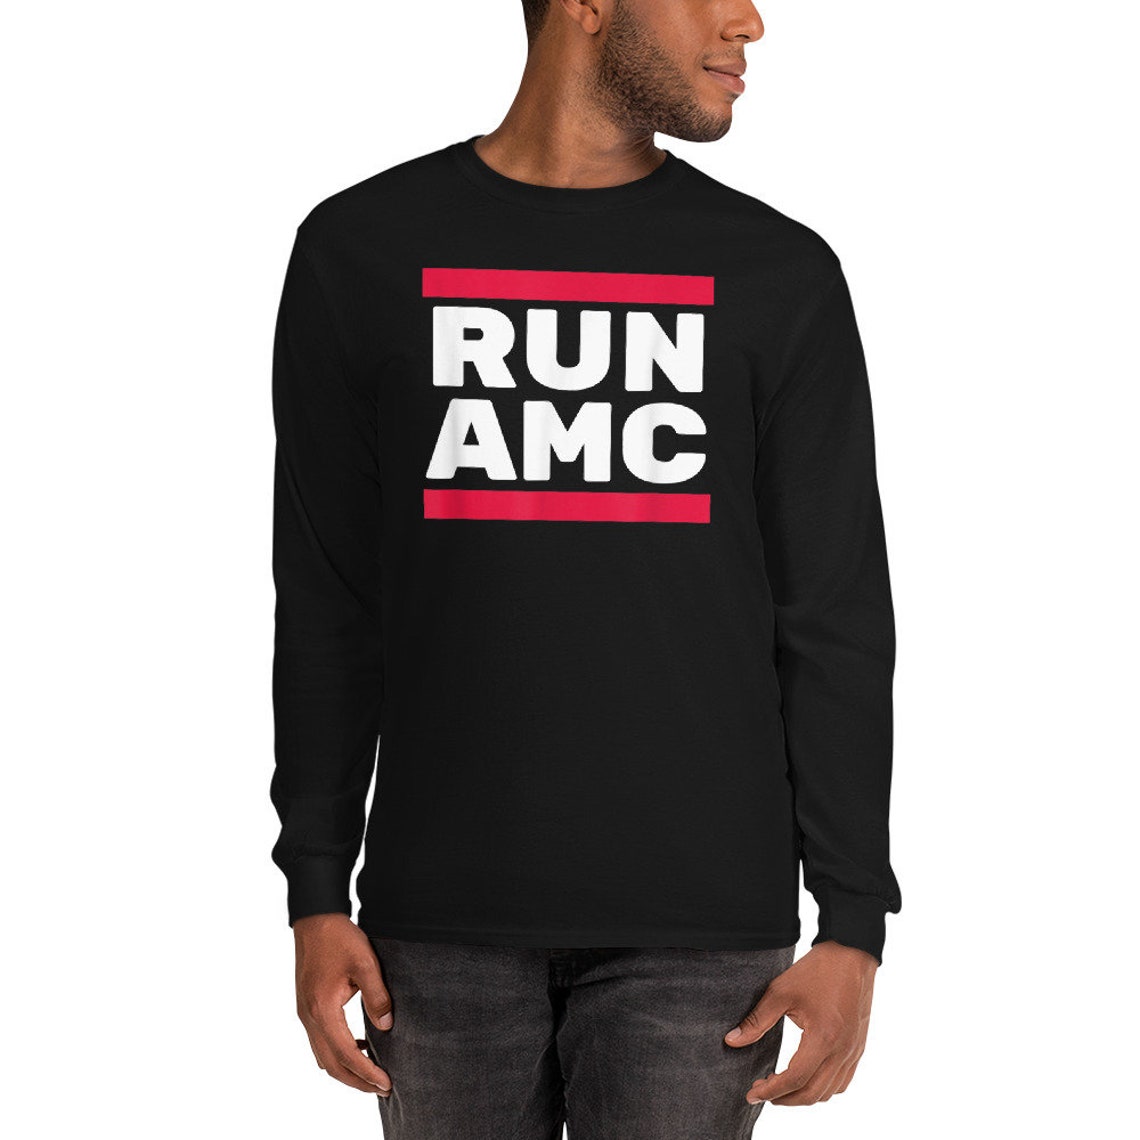 Run Amc Cryptocurrency shirt trading T-Shirt AMC Shirt To ...